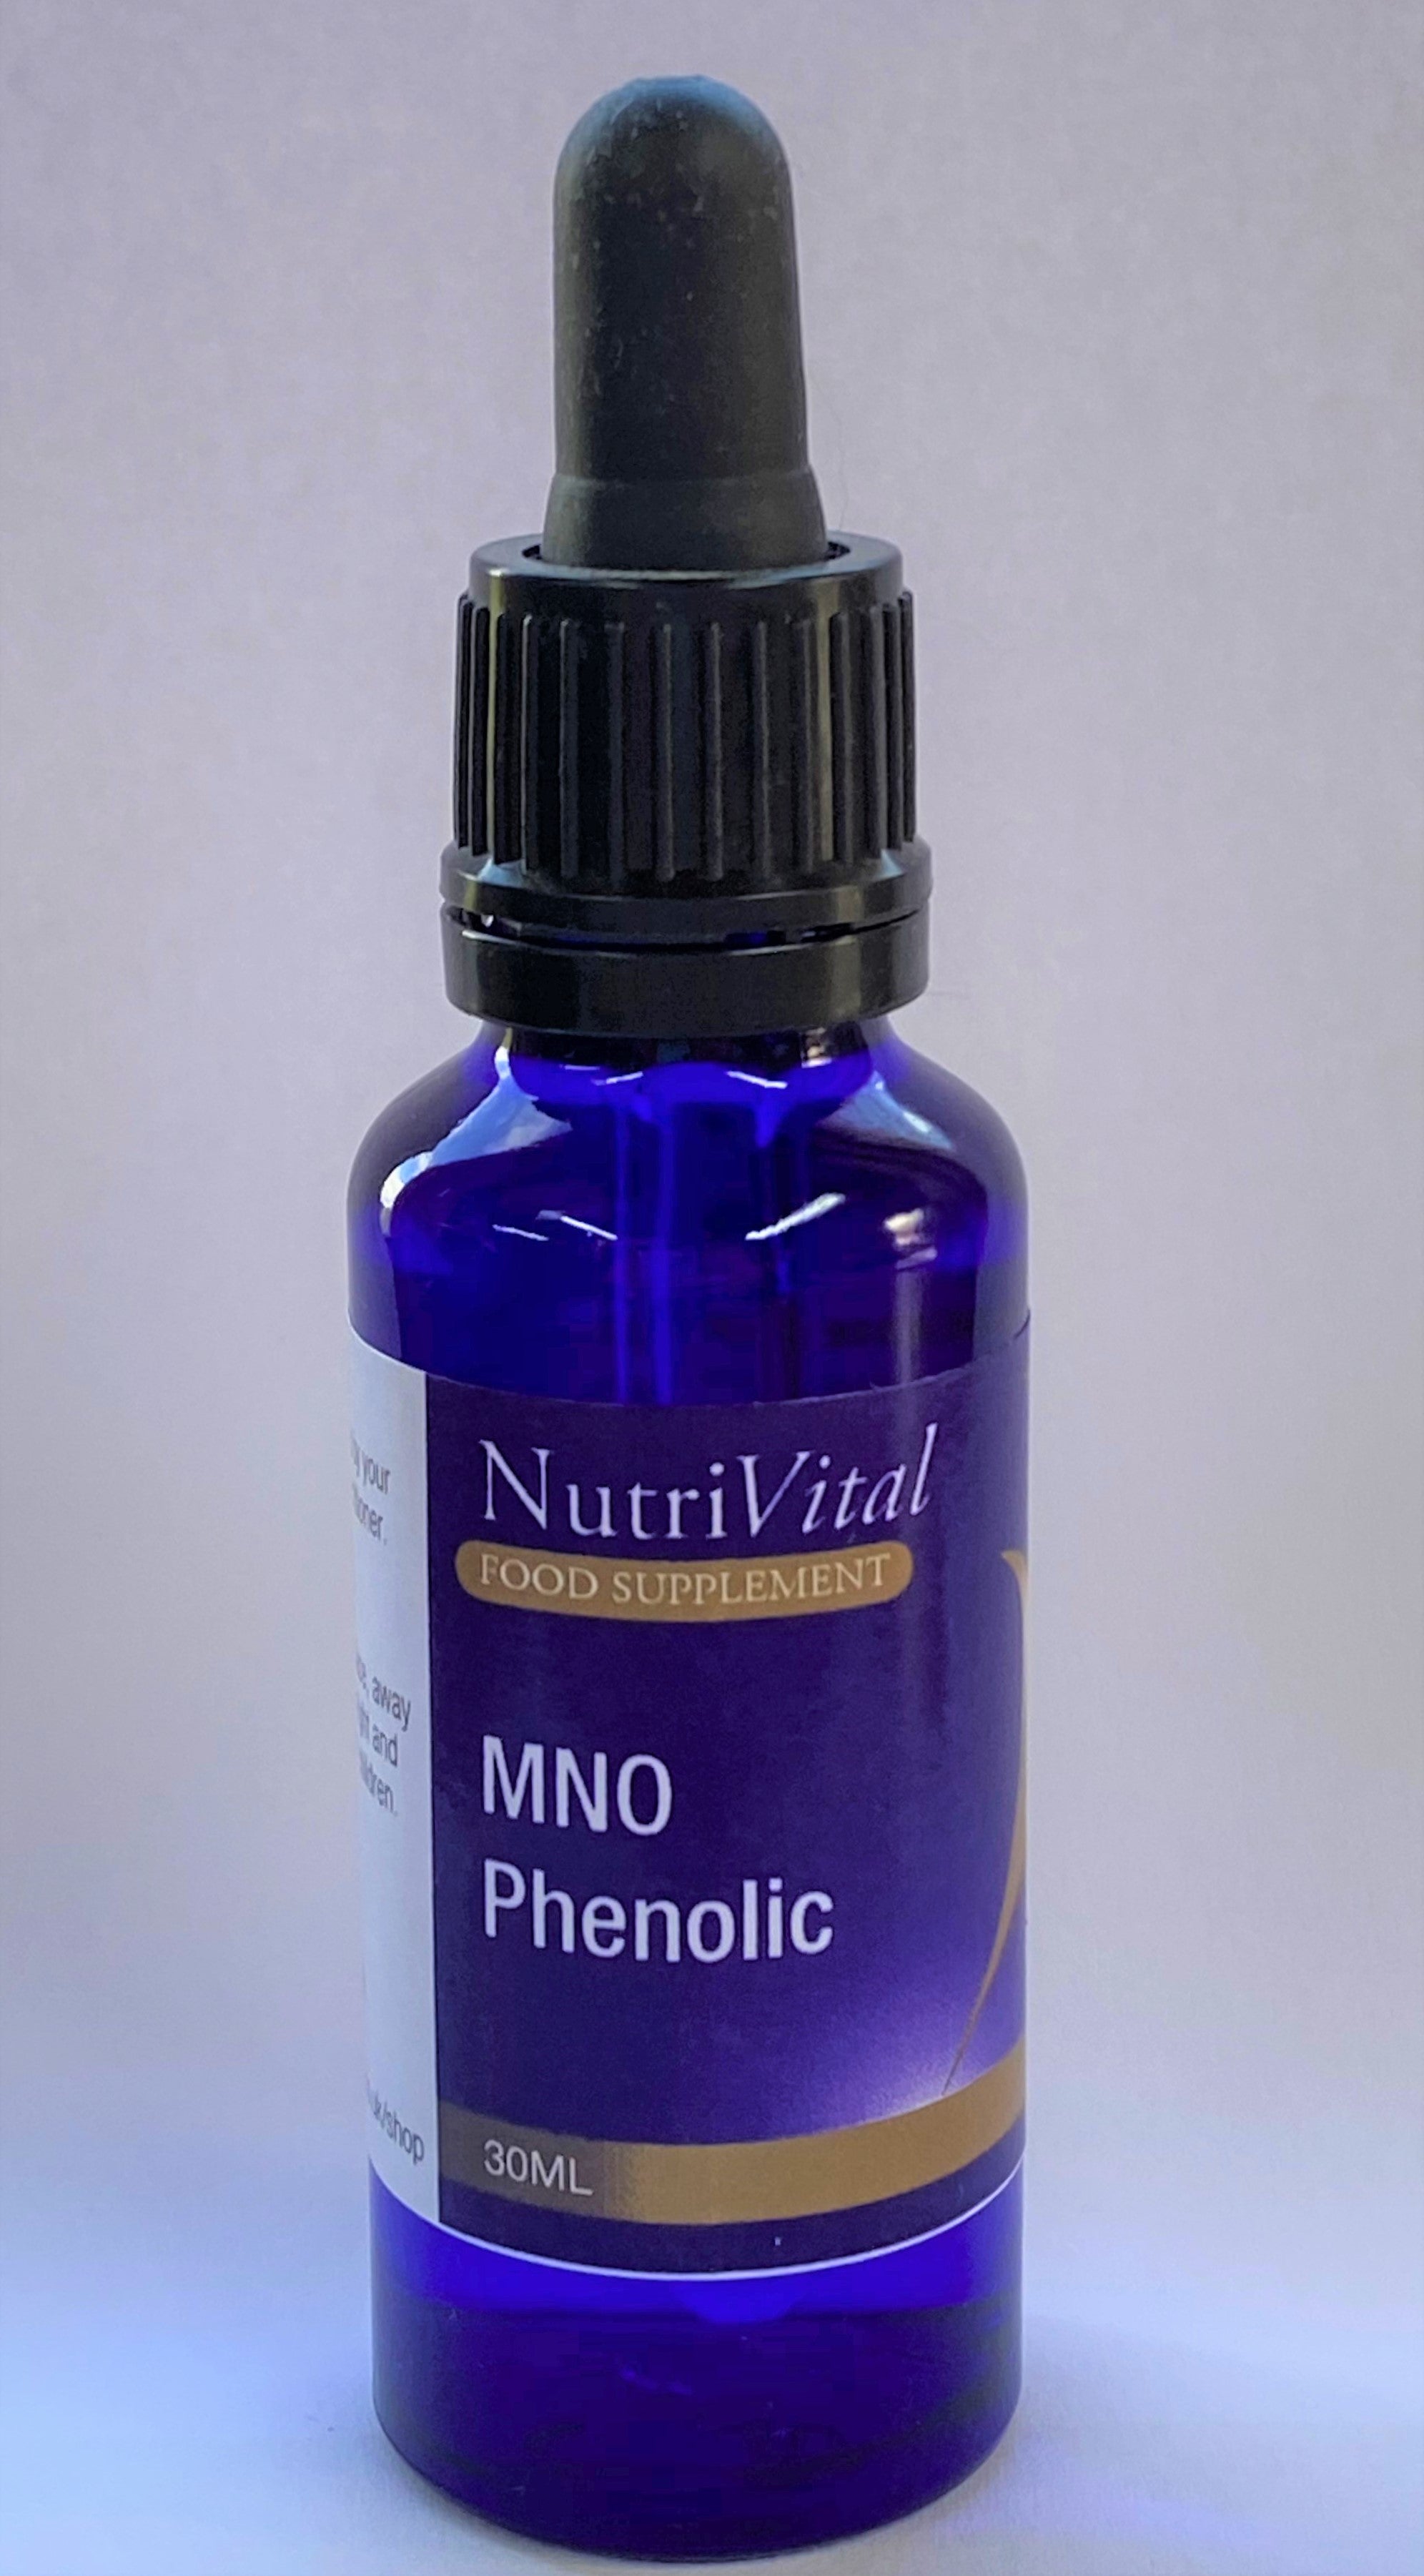 Nutrivital MNO Phenolic 30ml